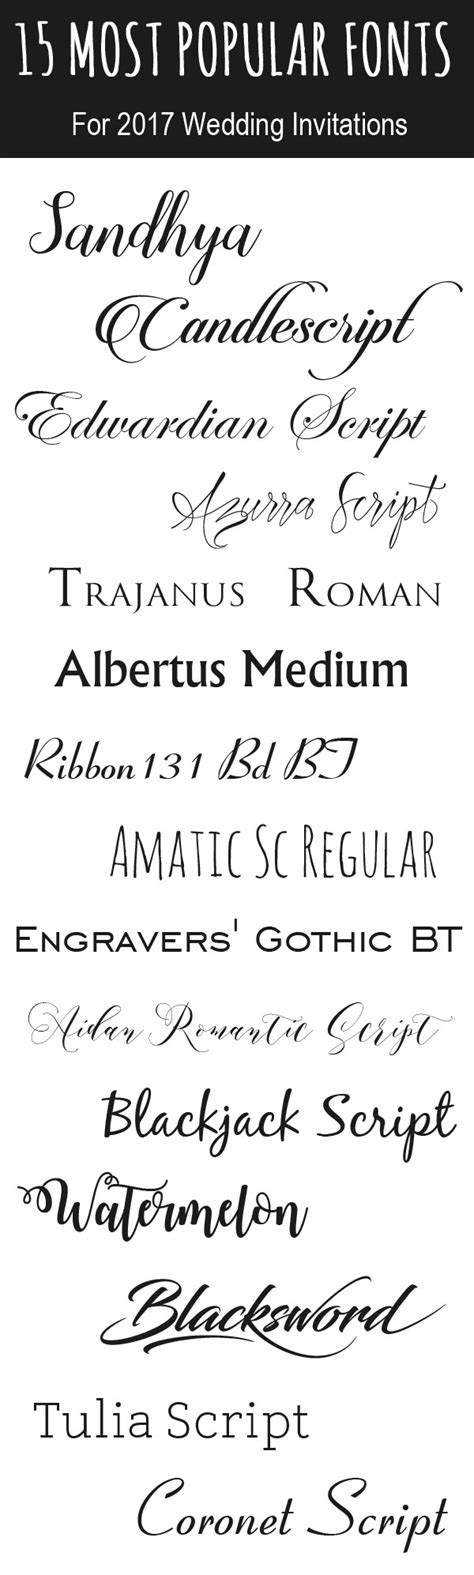 Wedding Font Ideas For Invitation Envelopes